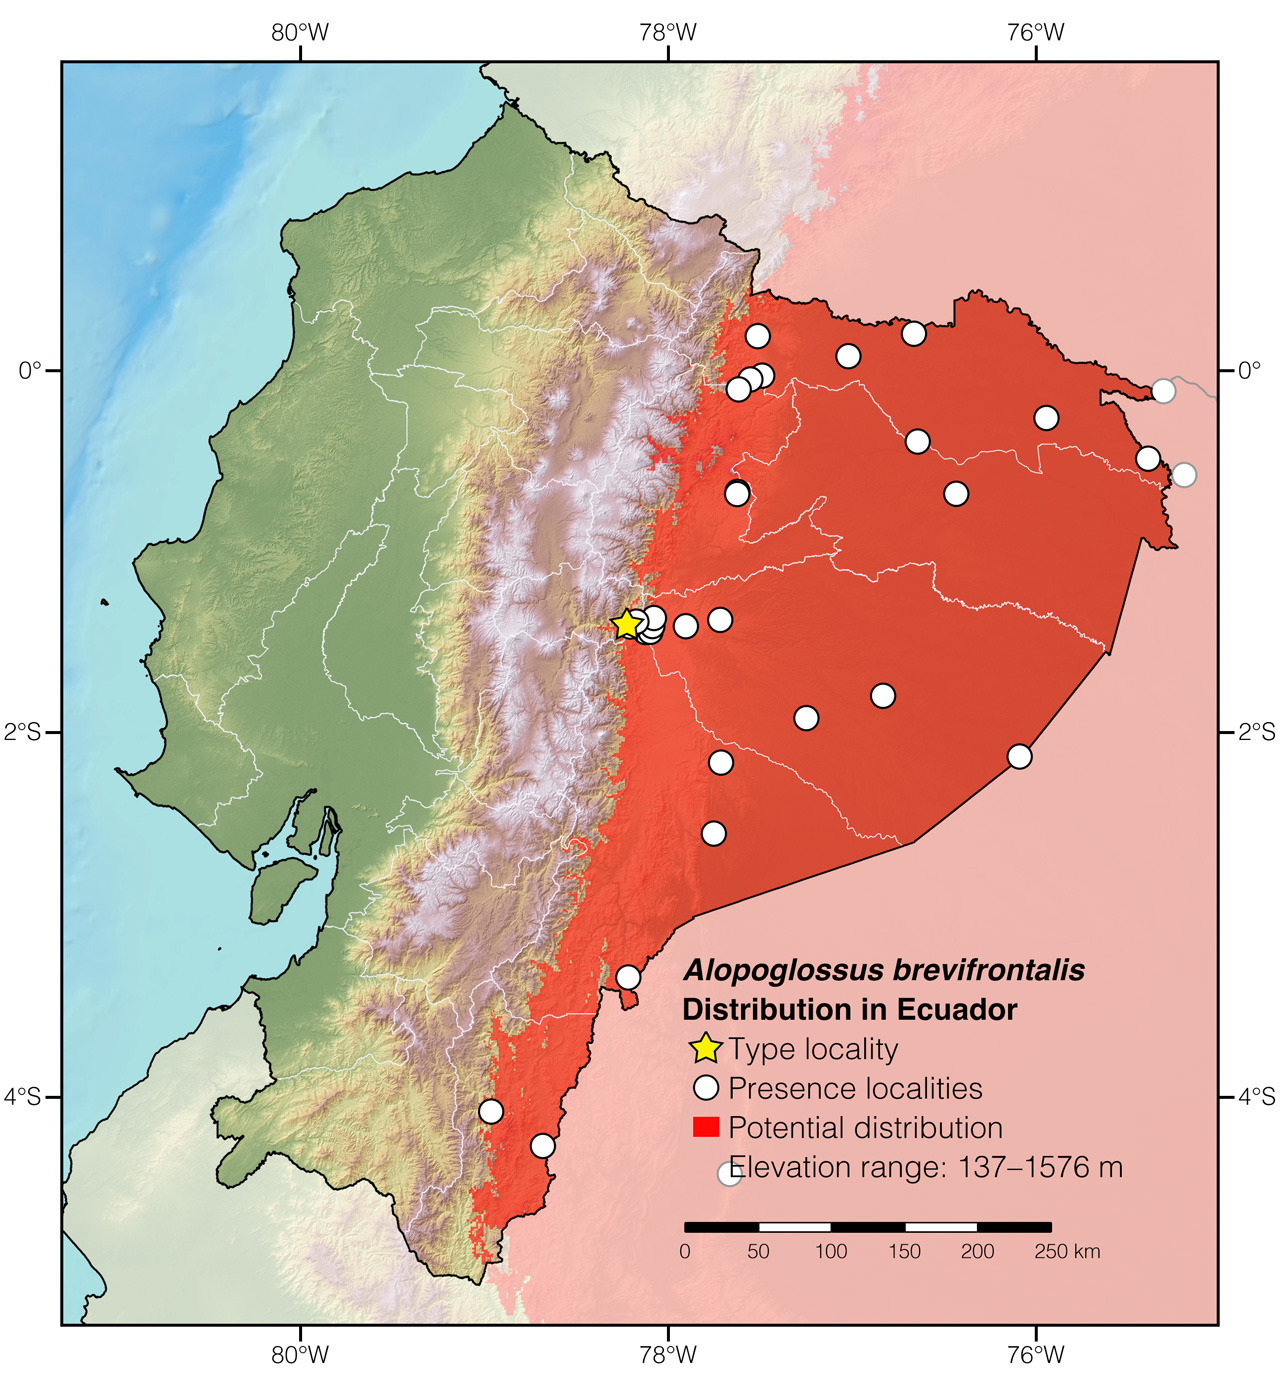 Distribution of Alopoglossus brevifrontalis in Ecuador